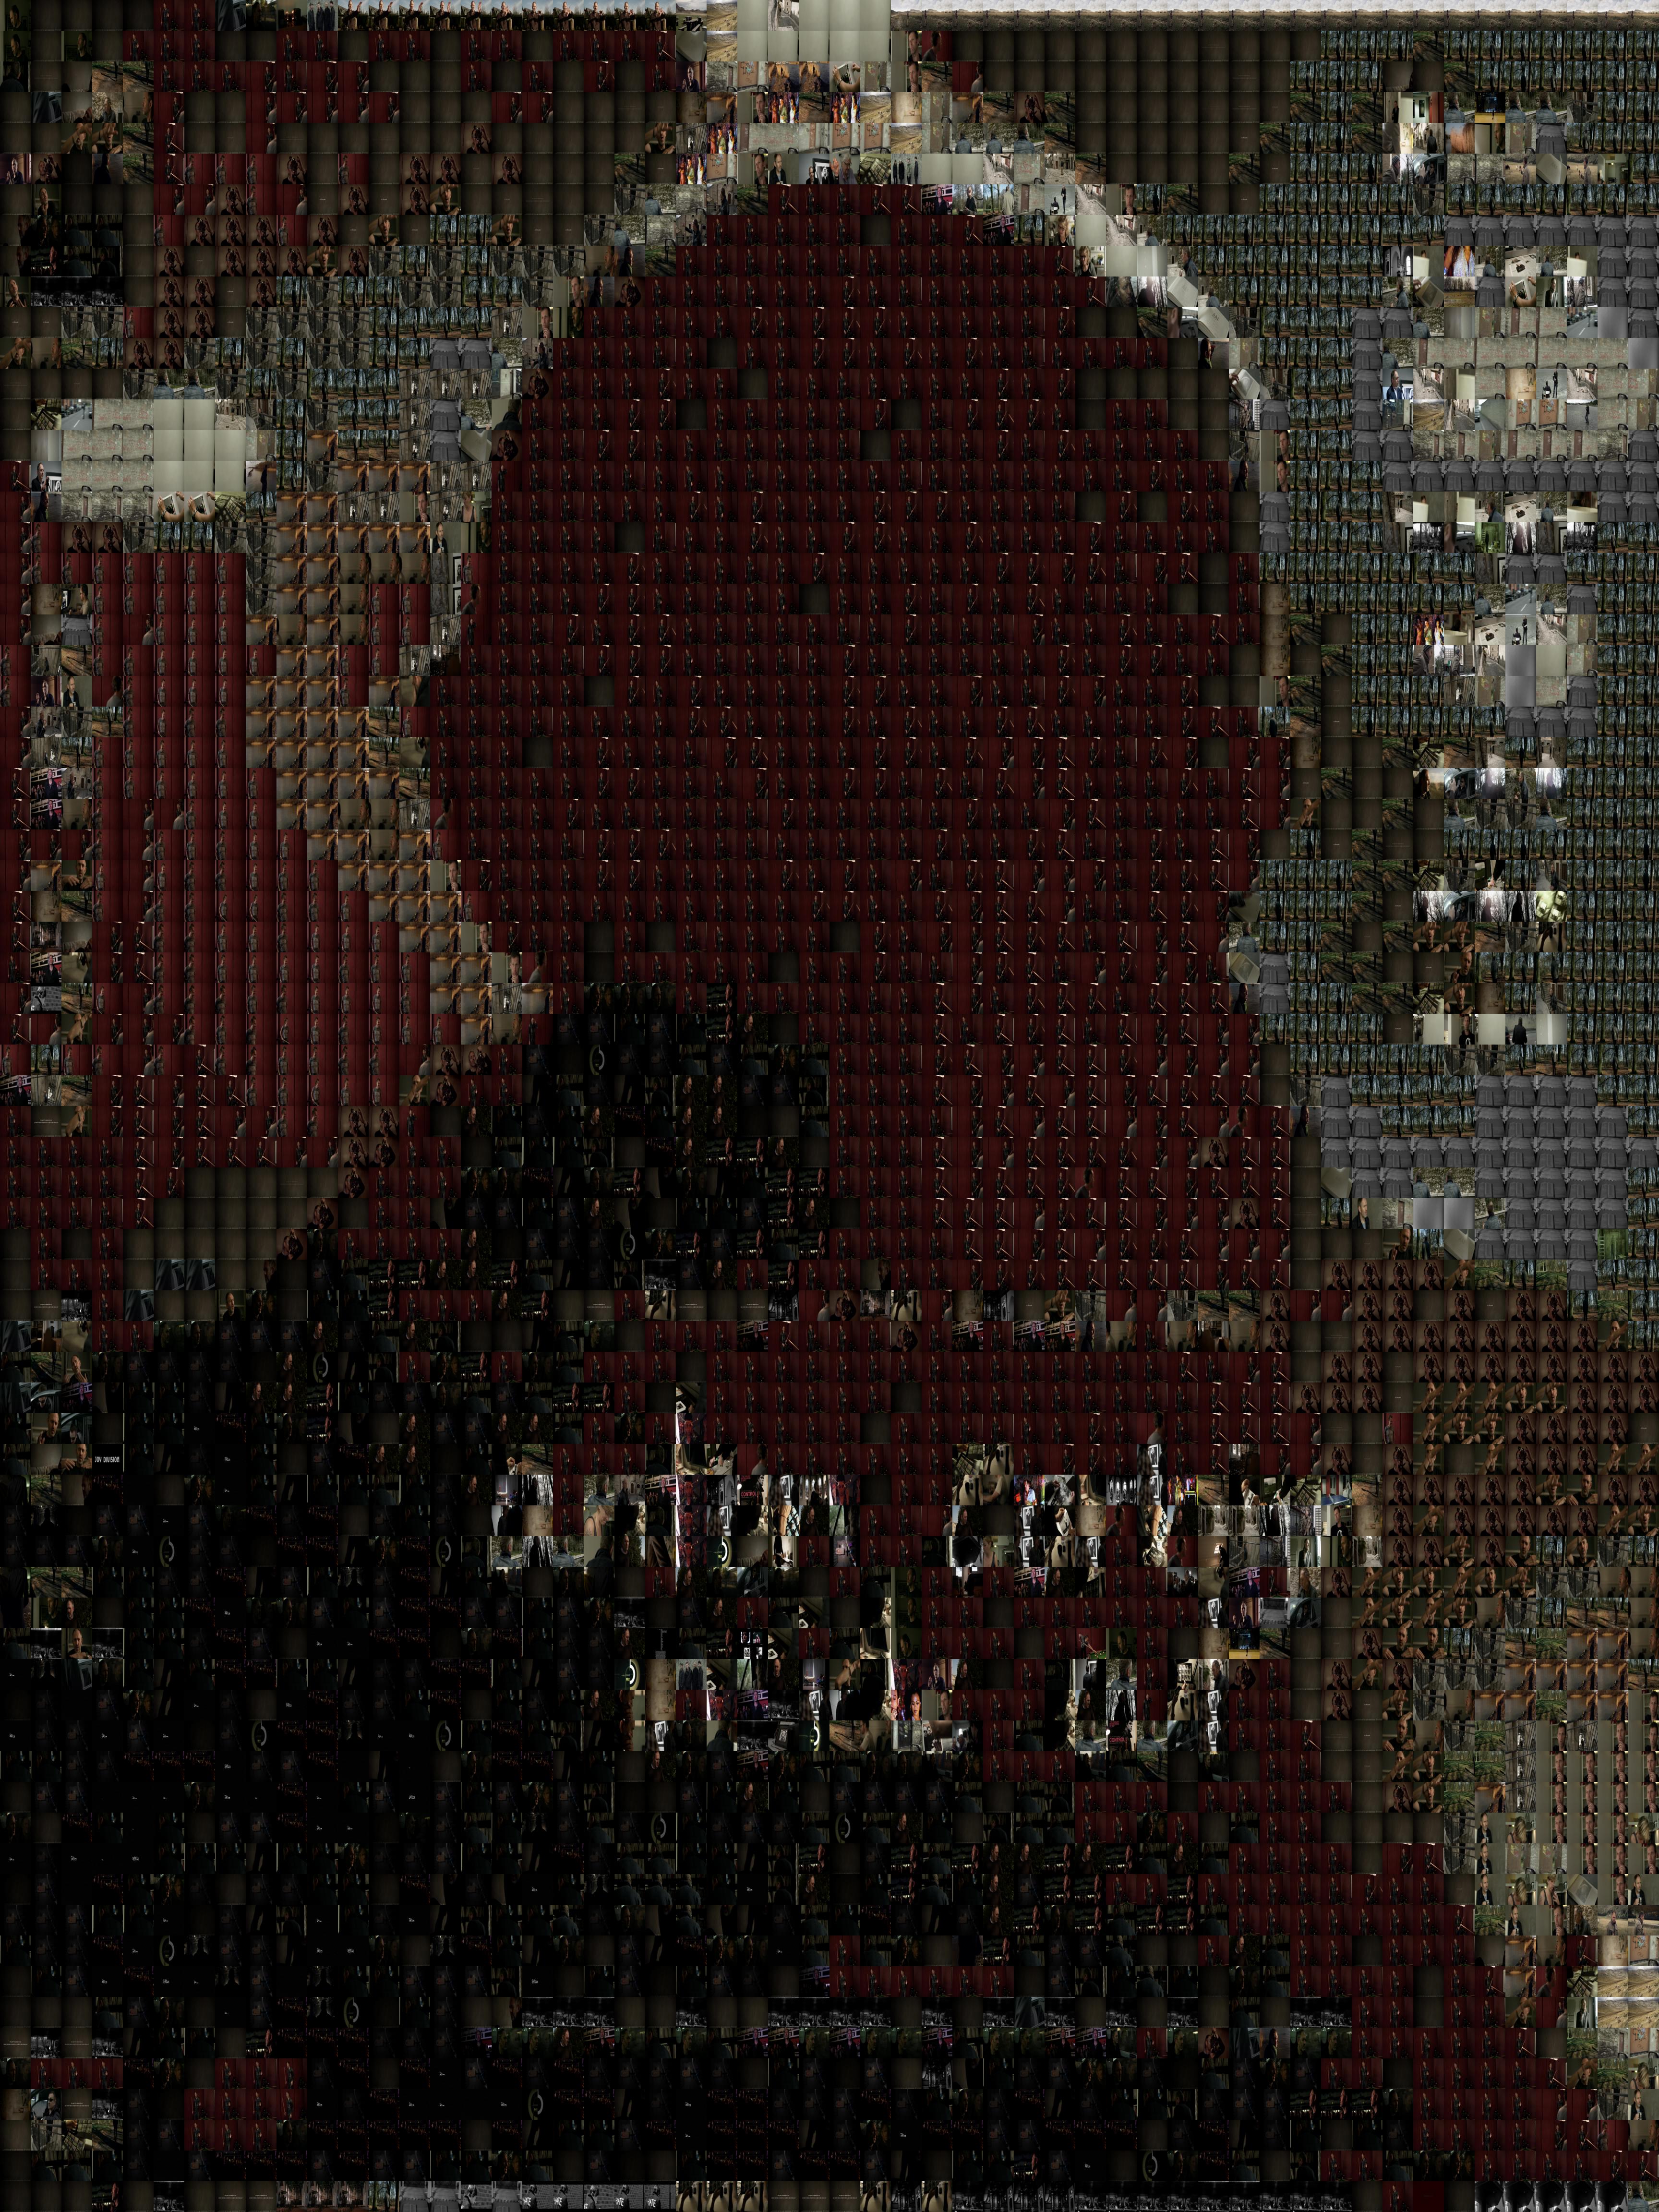 anton-corbijn-inside-out